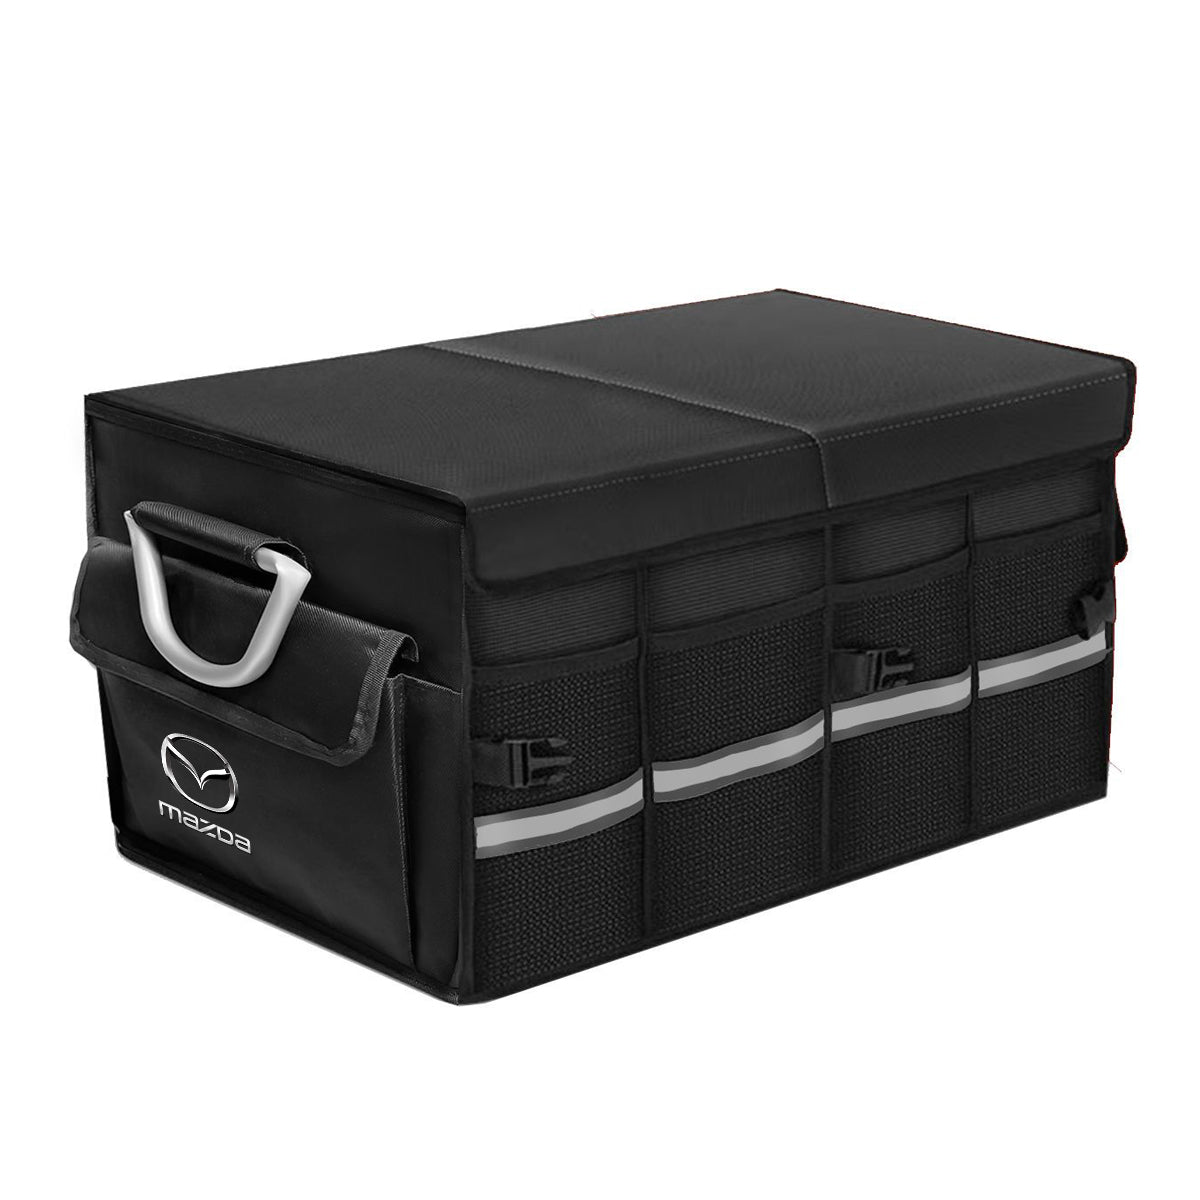 Mazda Organizer For Car Trunk Box Storage, Car Accessories